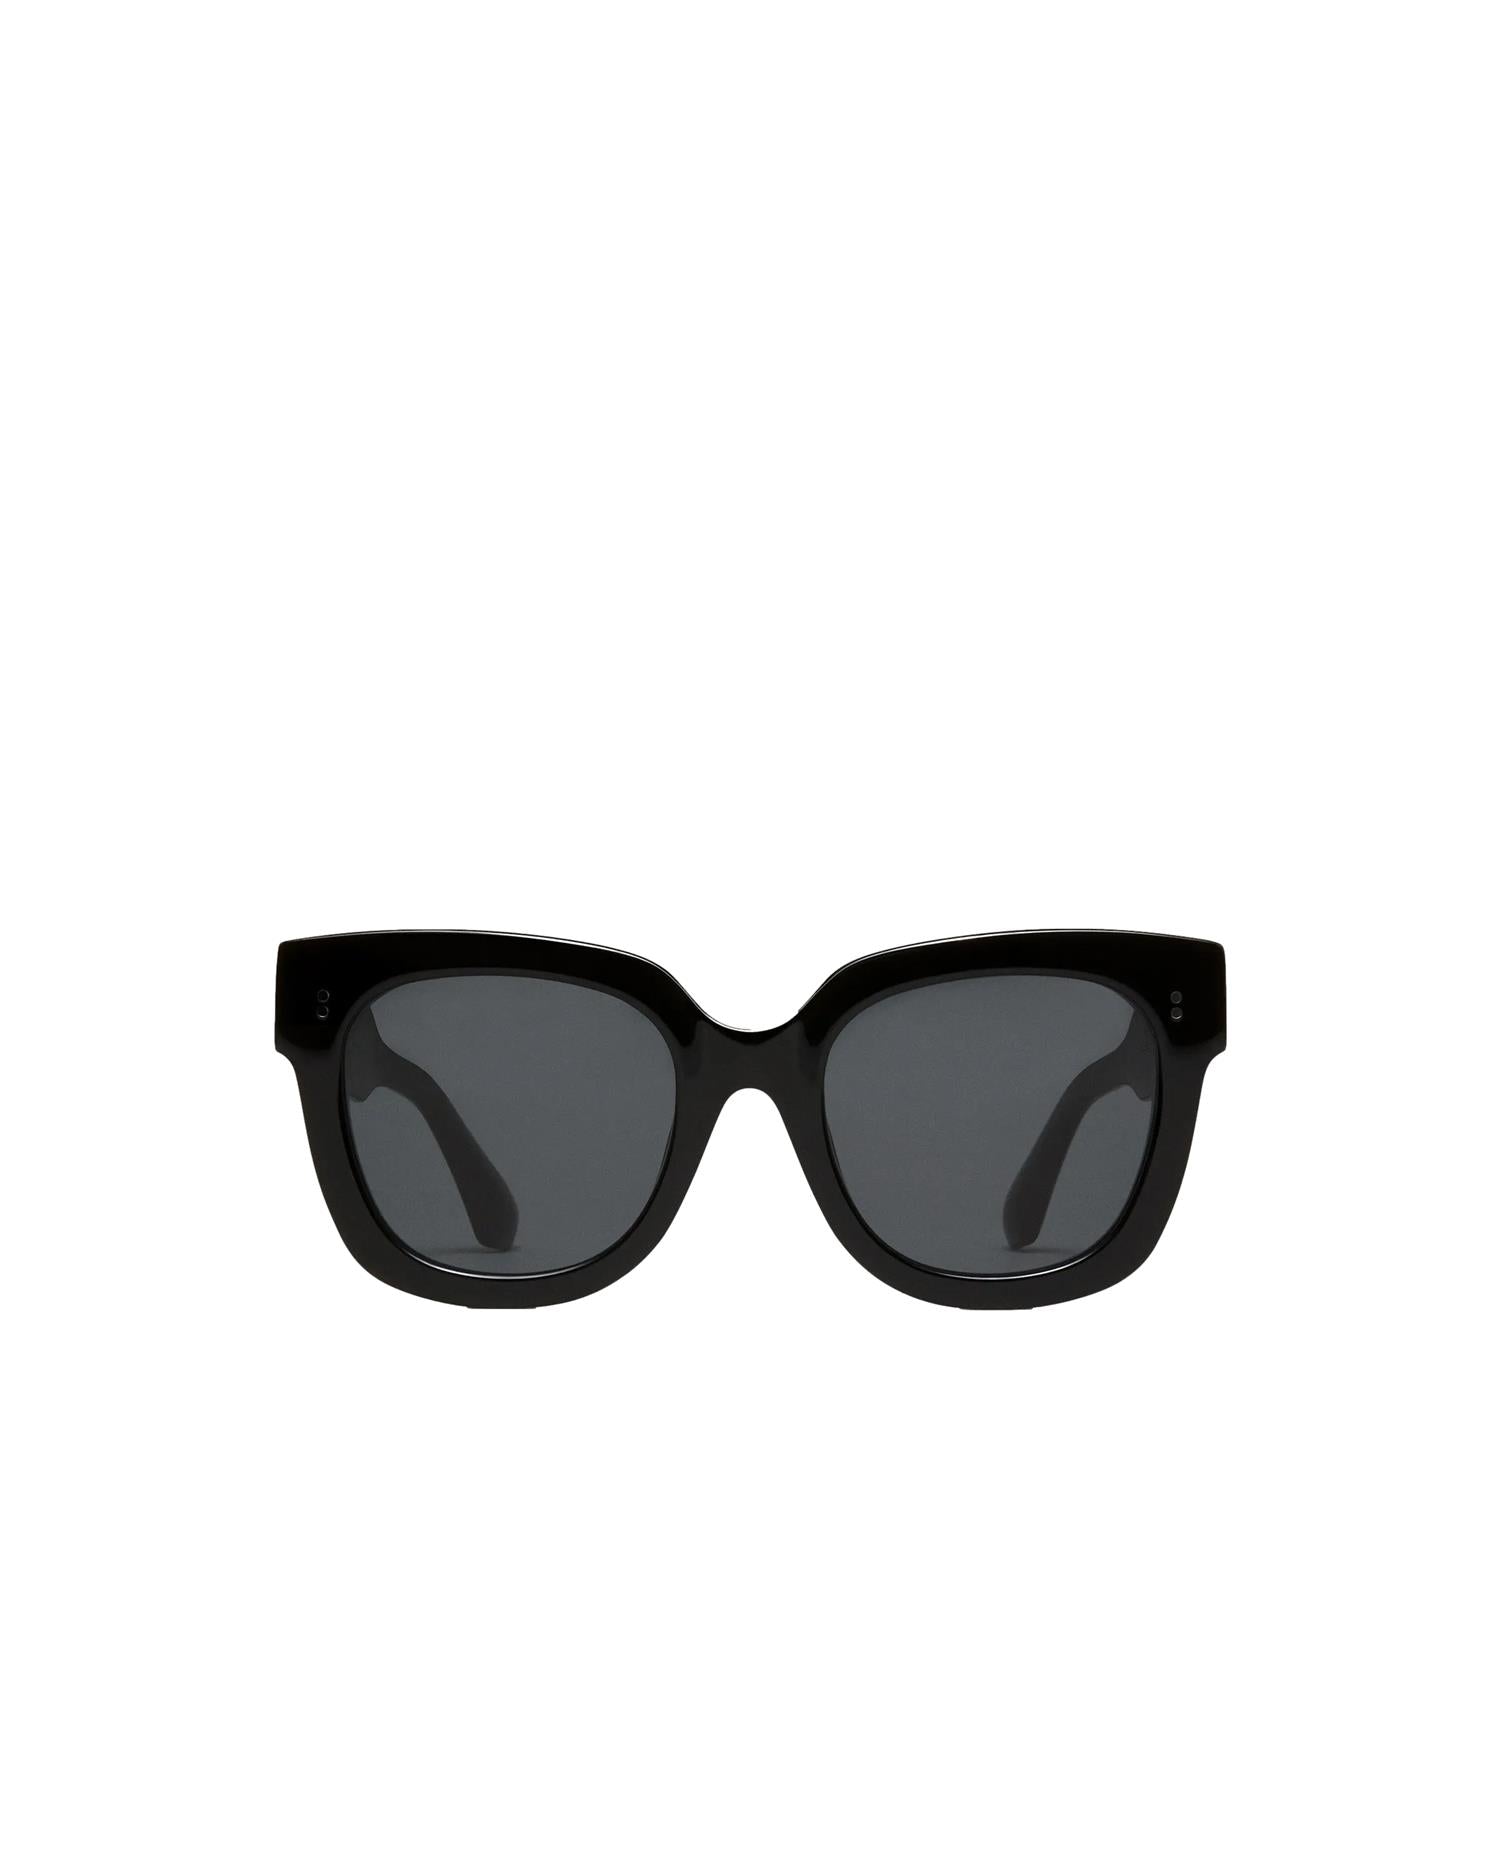 Chimi Eyewear 08 Black Solbriller Sort